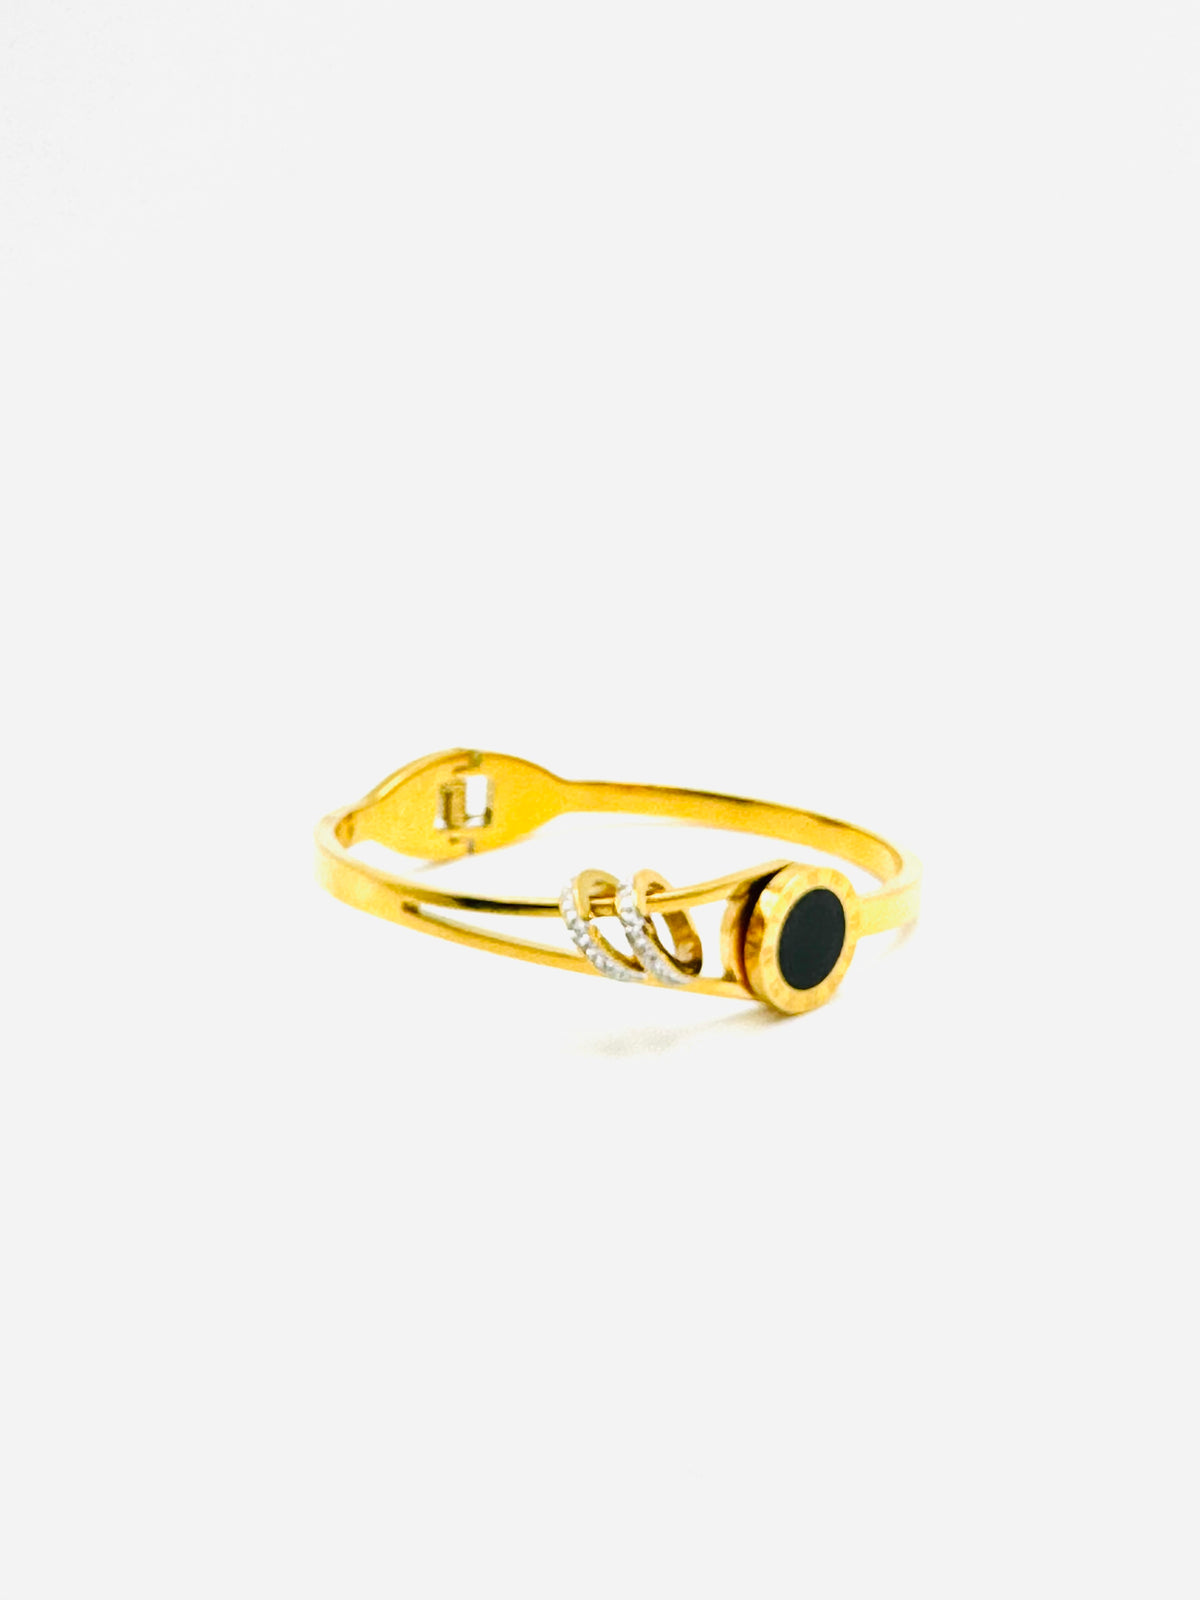 Roman Elegance Gold Bangle Bracelet